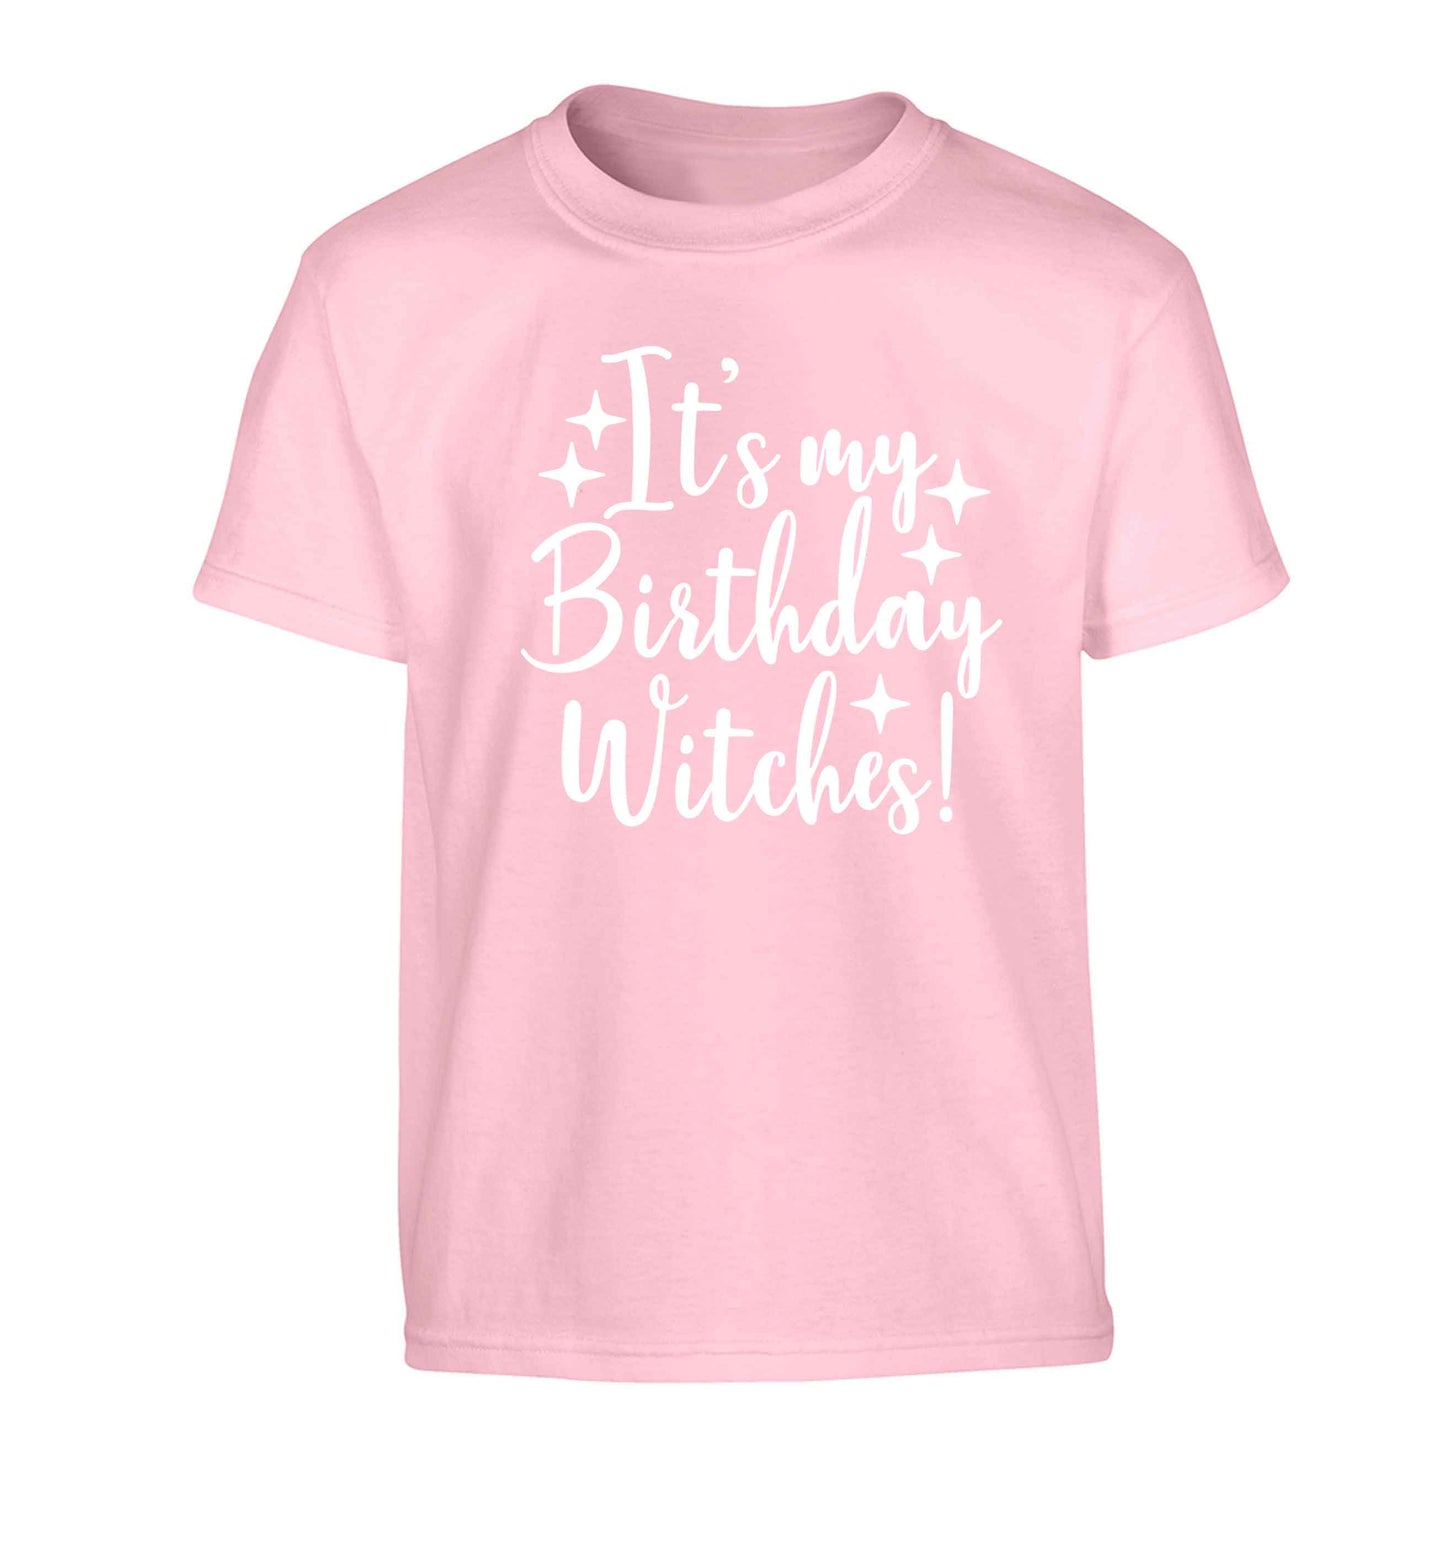 It's my birthday witches!Children's light pink Tshirt 12-13 Years